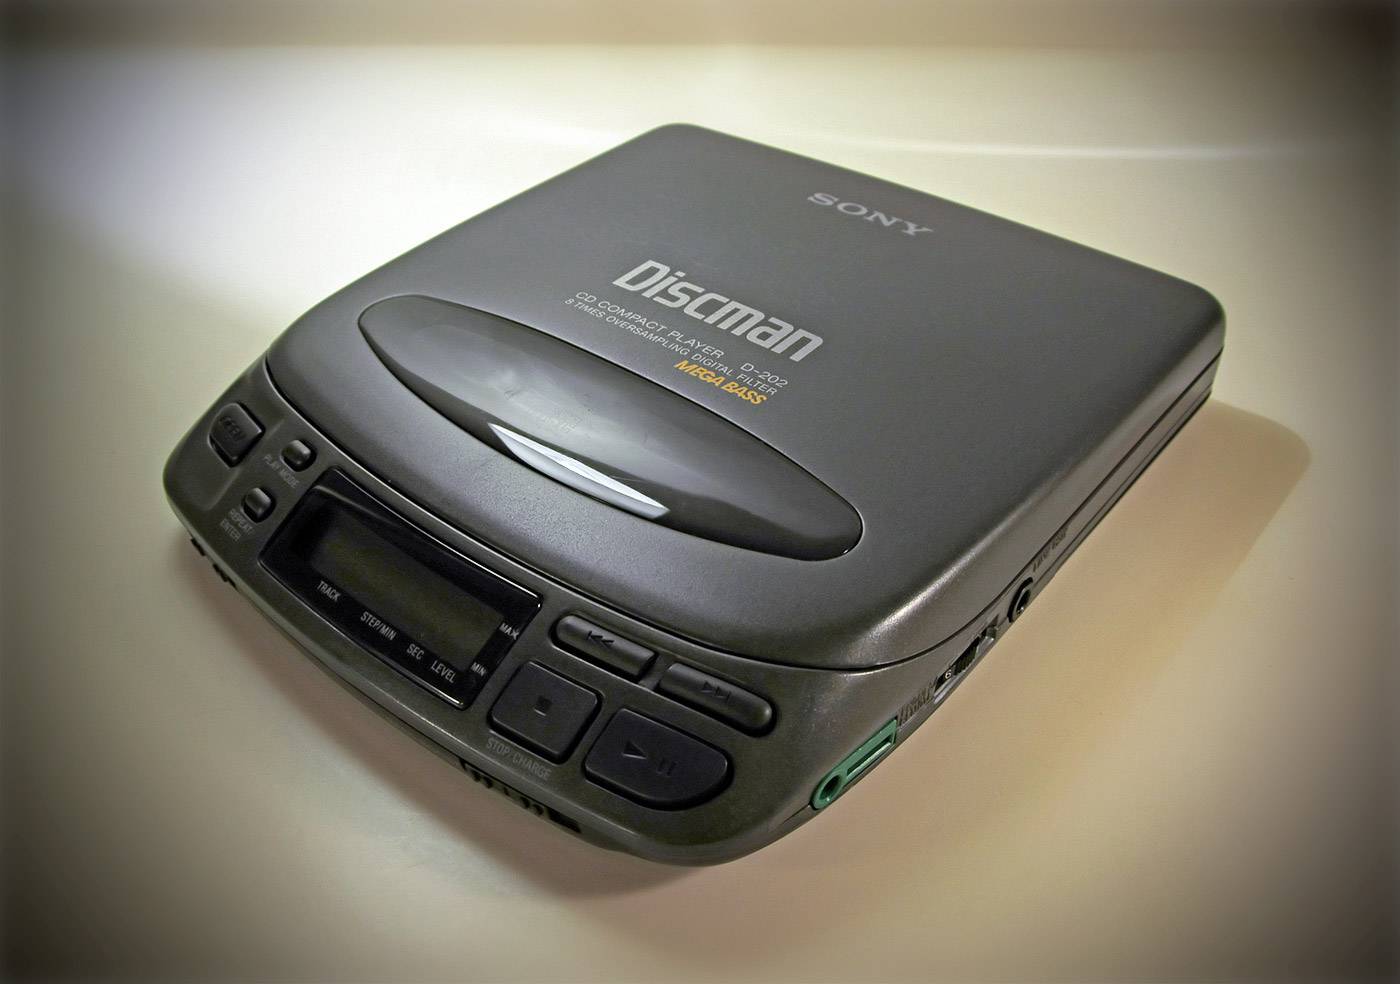 Sony D-202